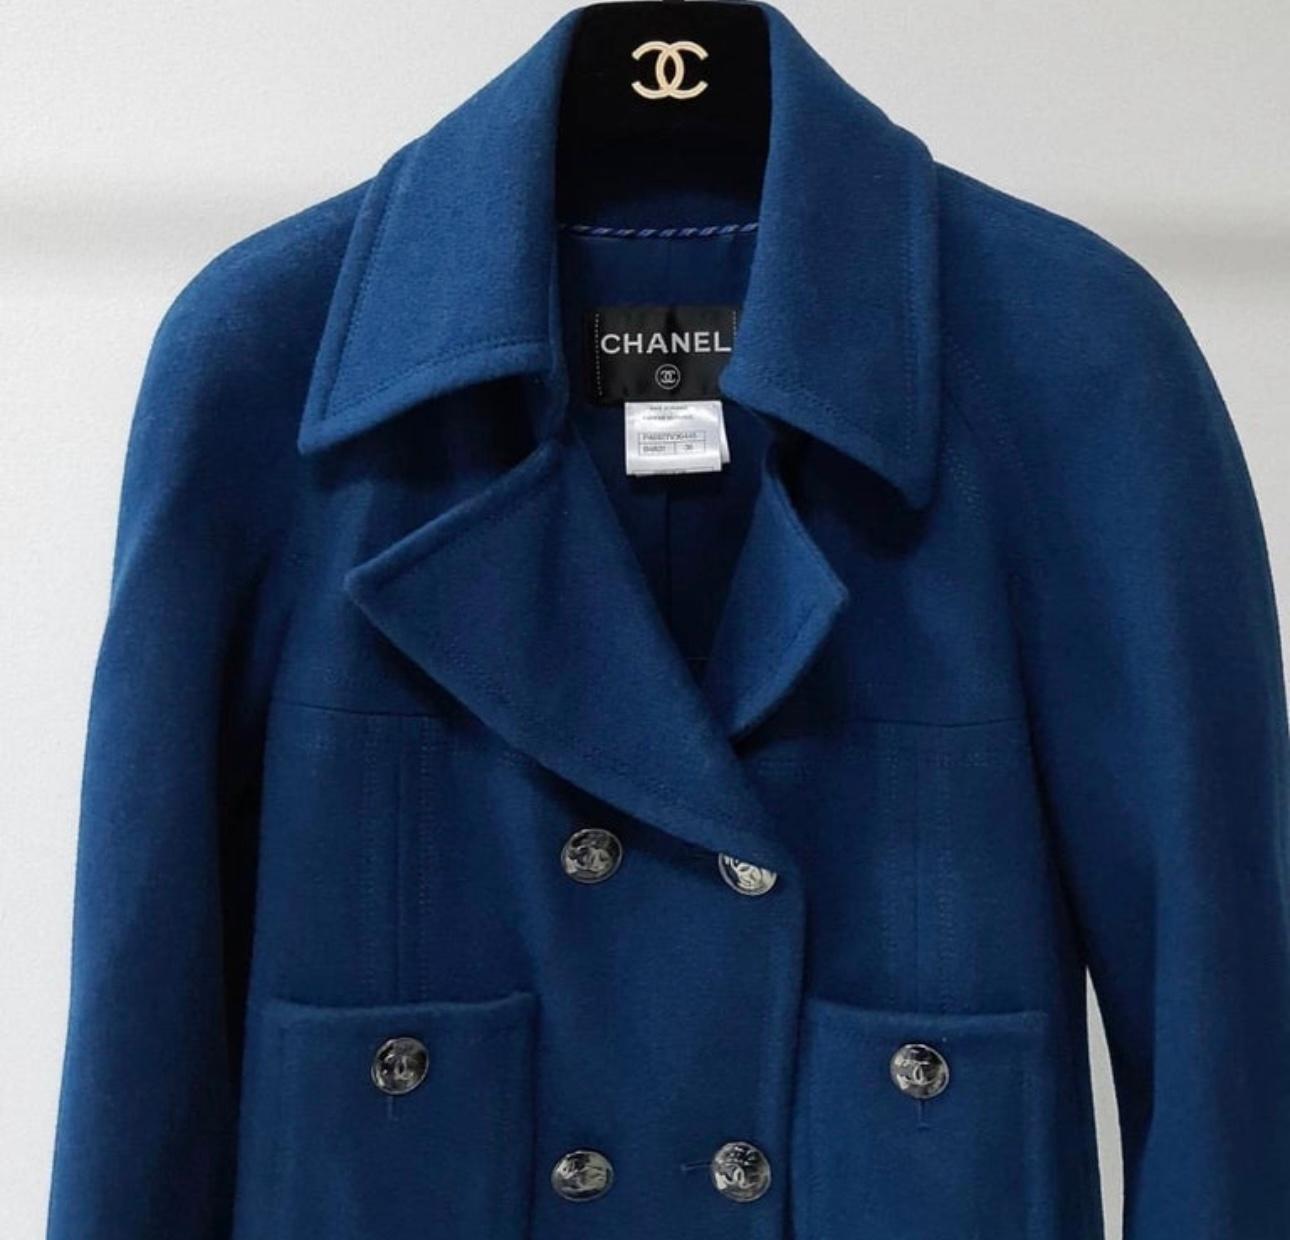 Chanel Cara Delevingne Style Runway Jacket For Sale 3